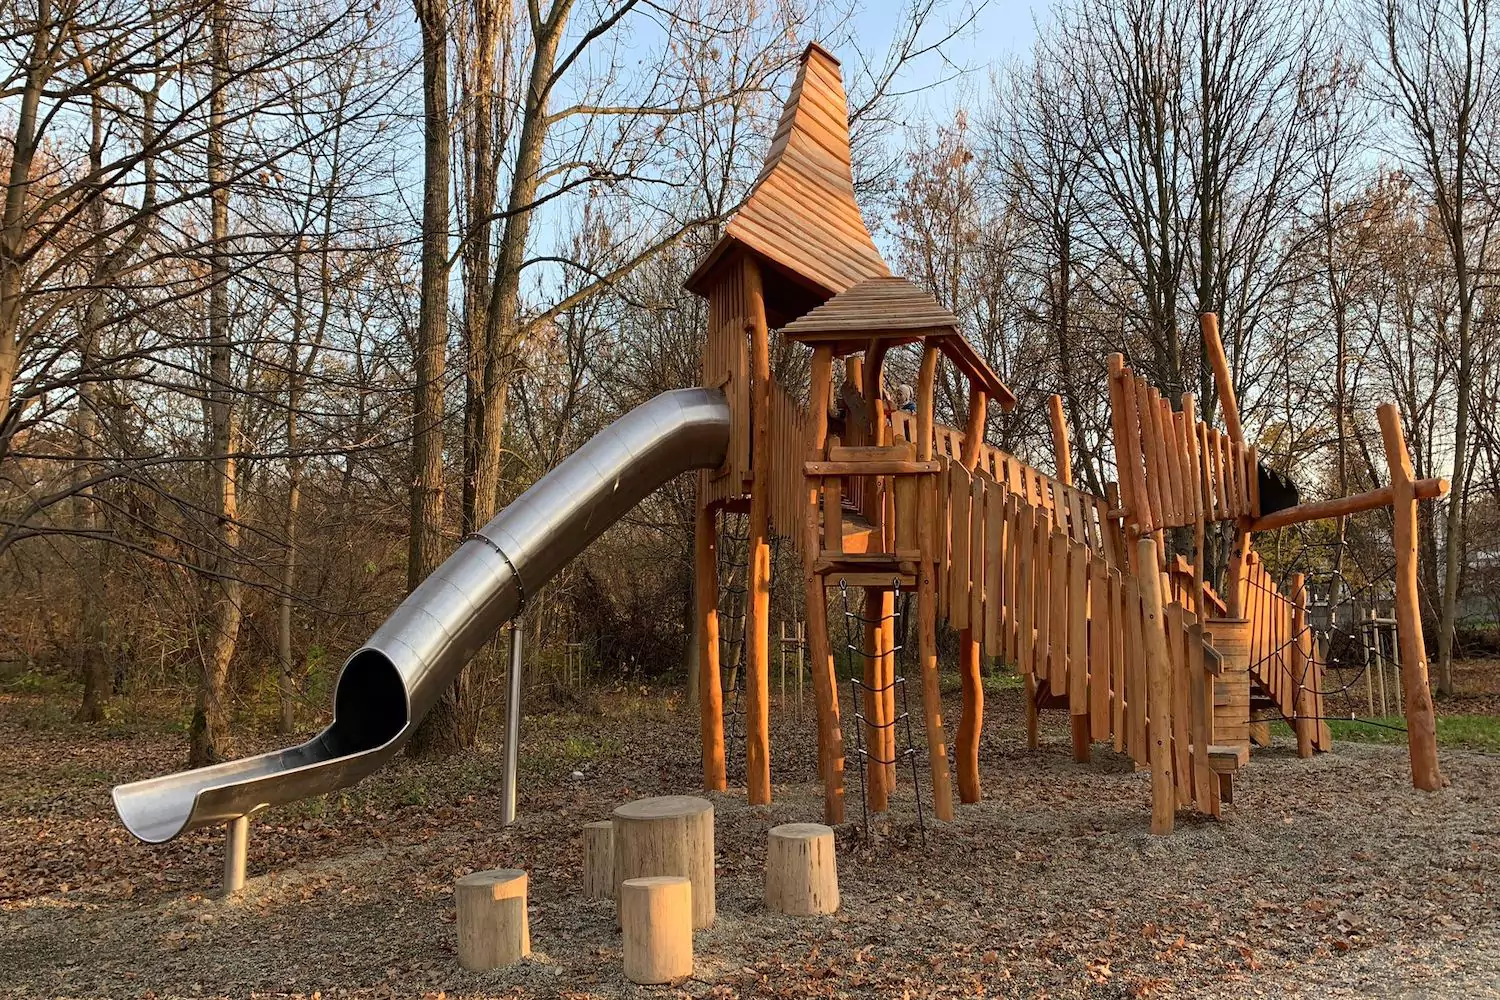 Playground steel tube slide in the park